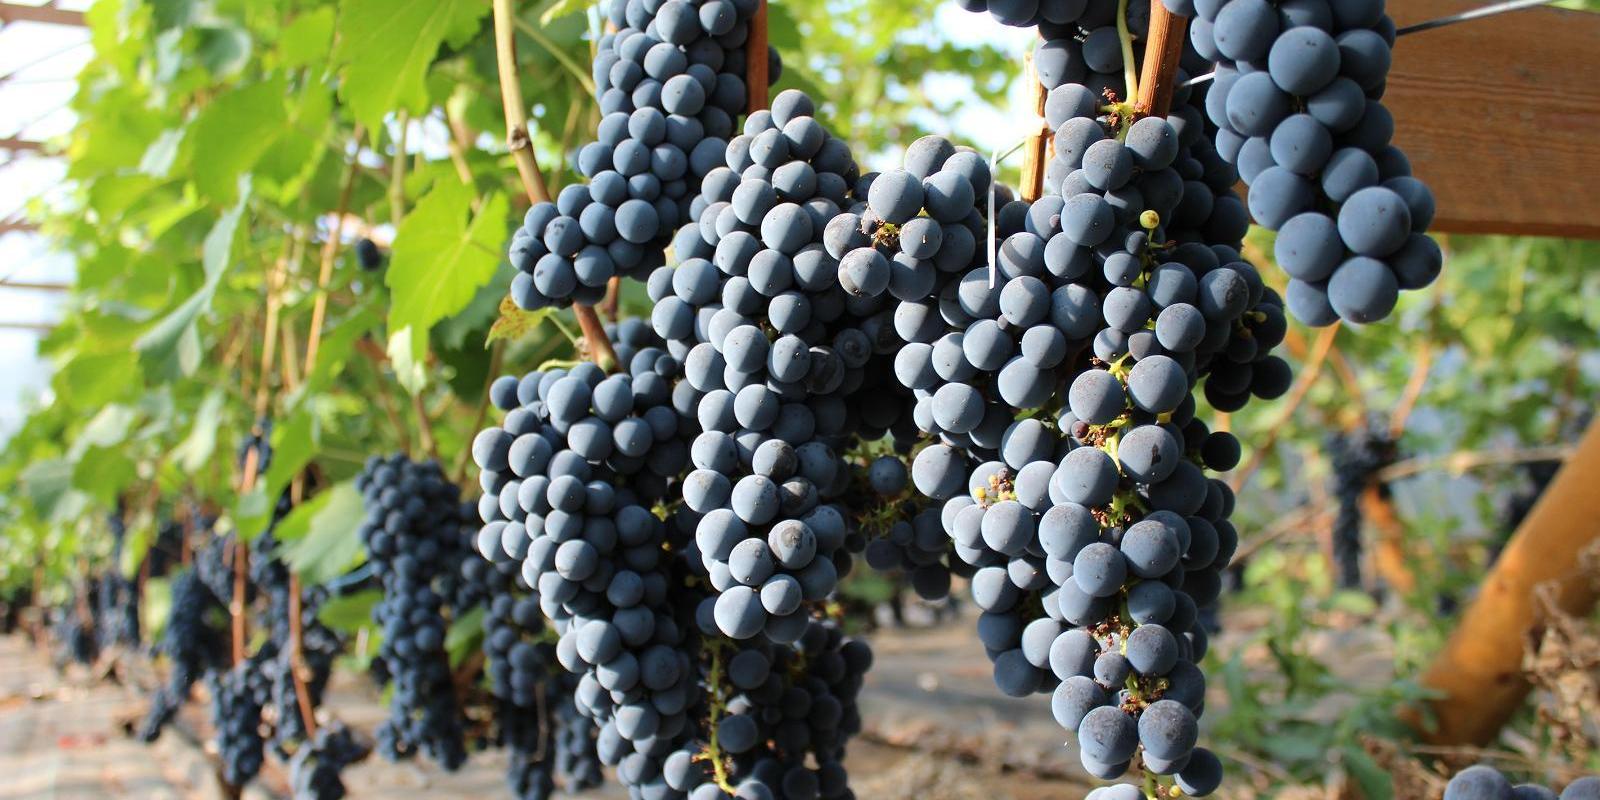 Järiste Winery, ripe fruit of the vineyard